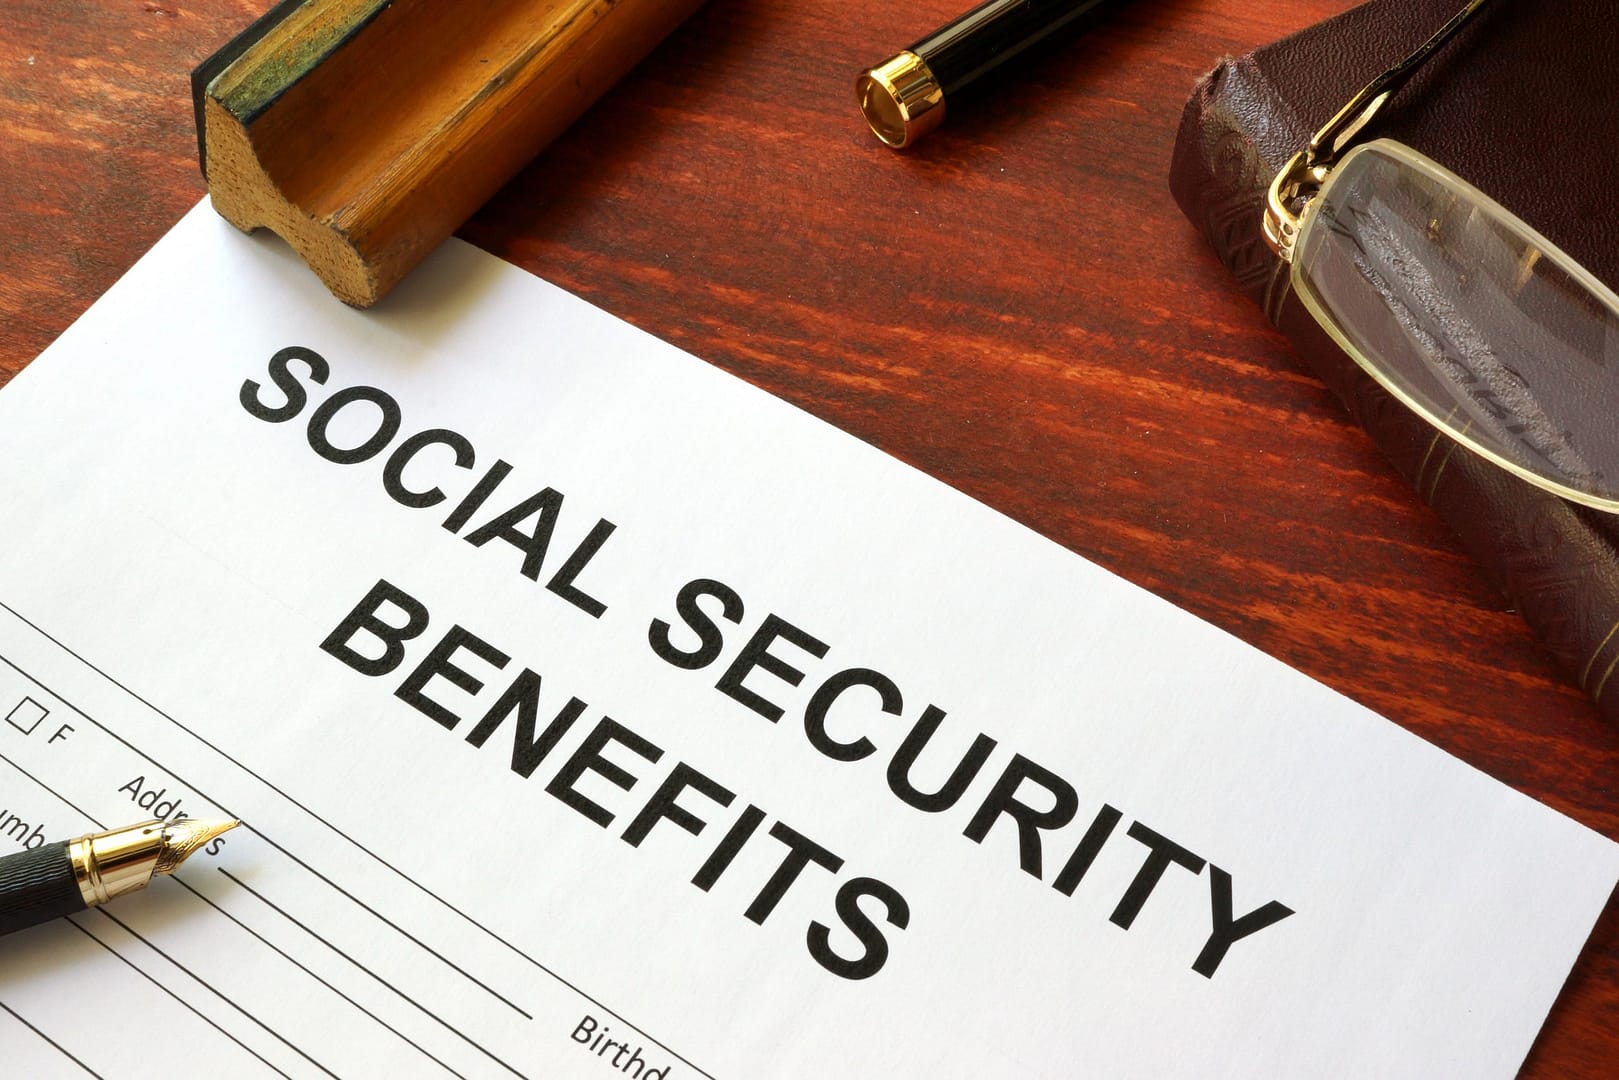 Social Security claims